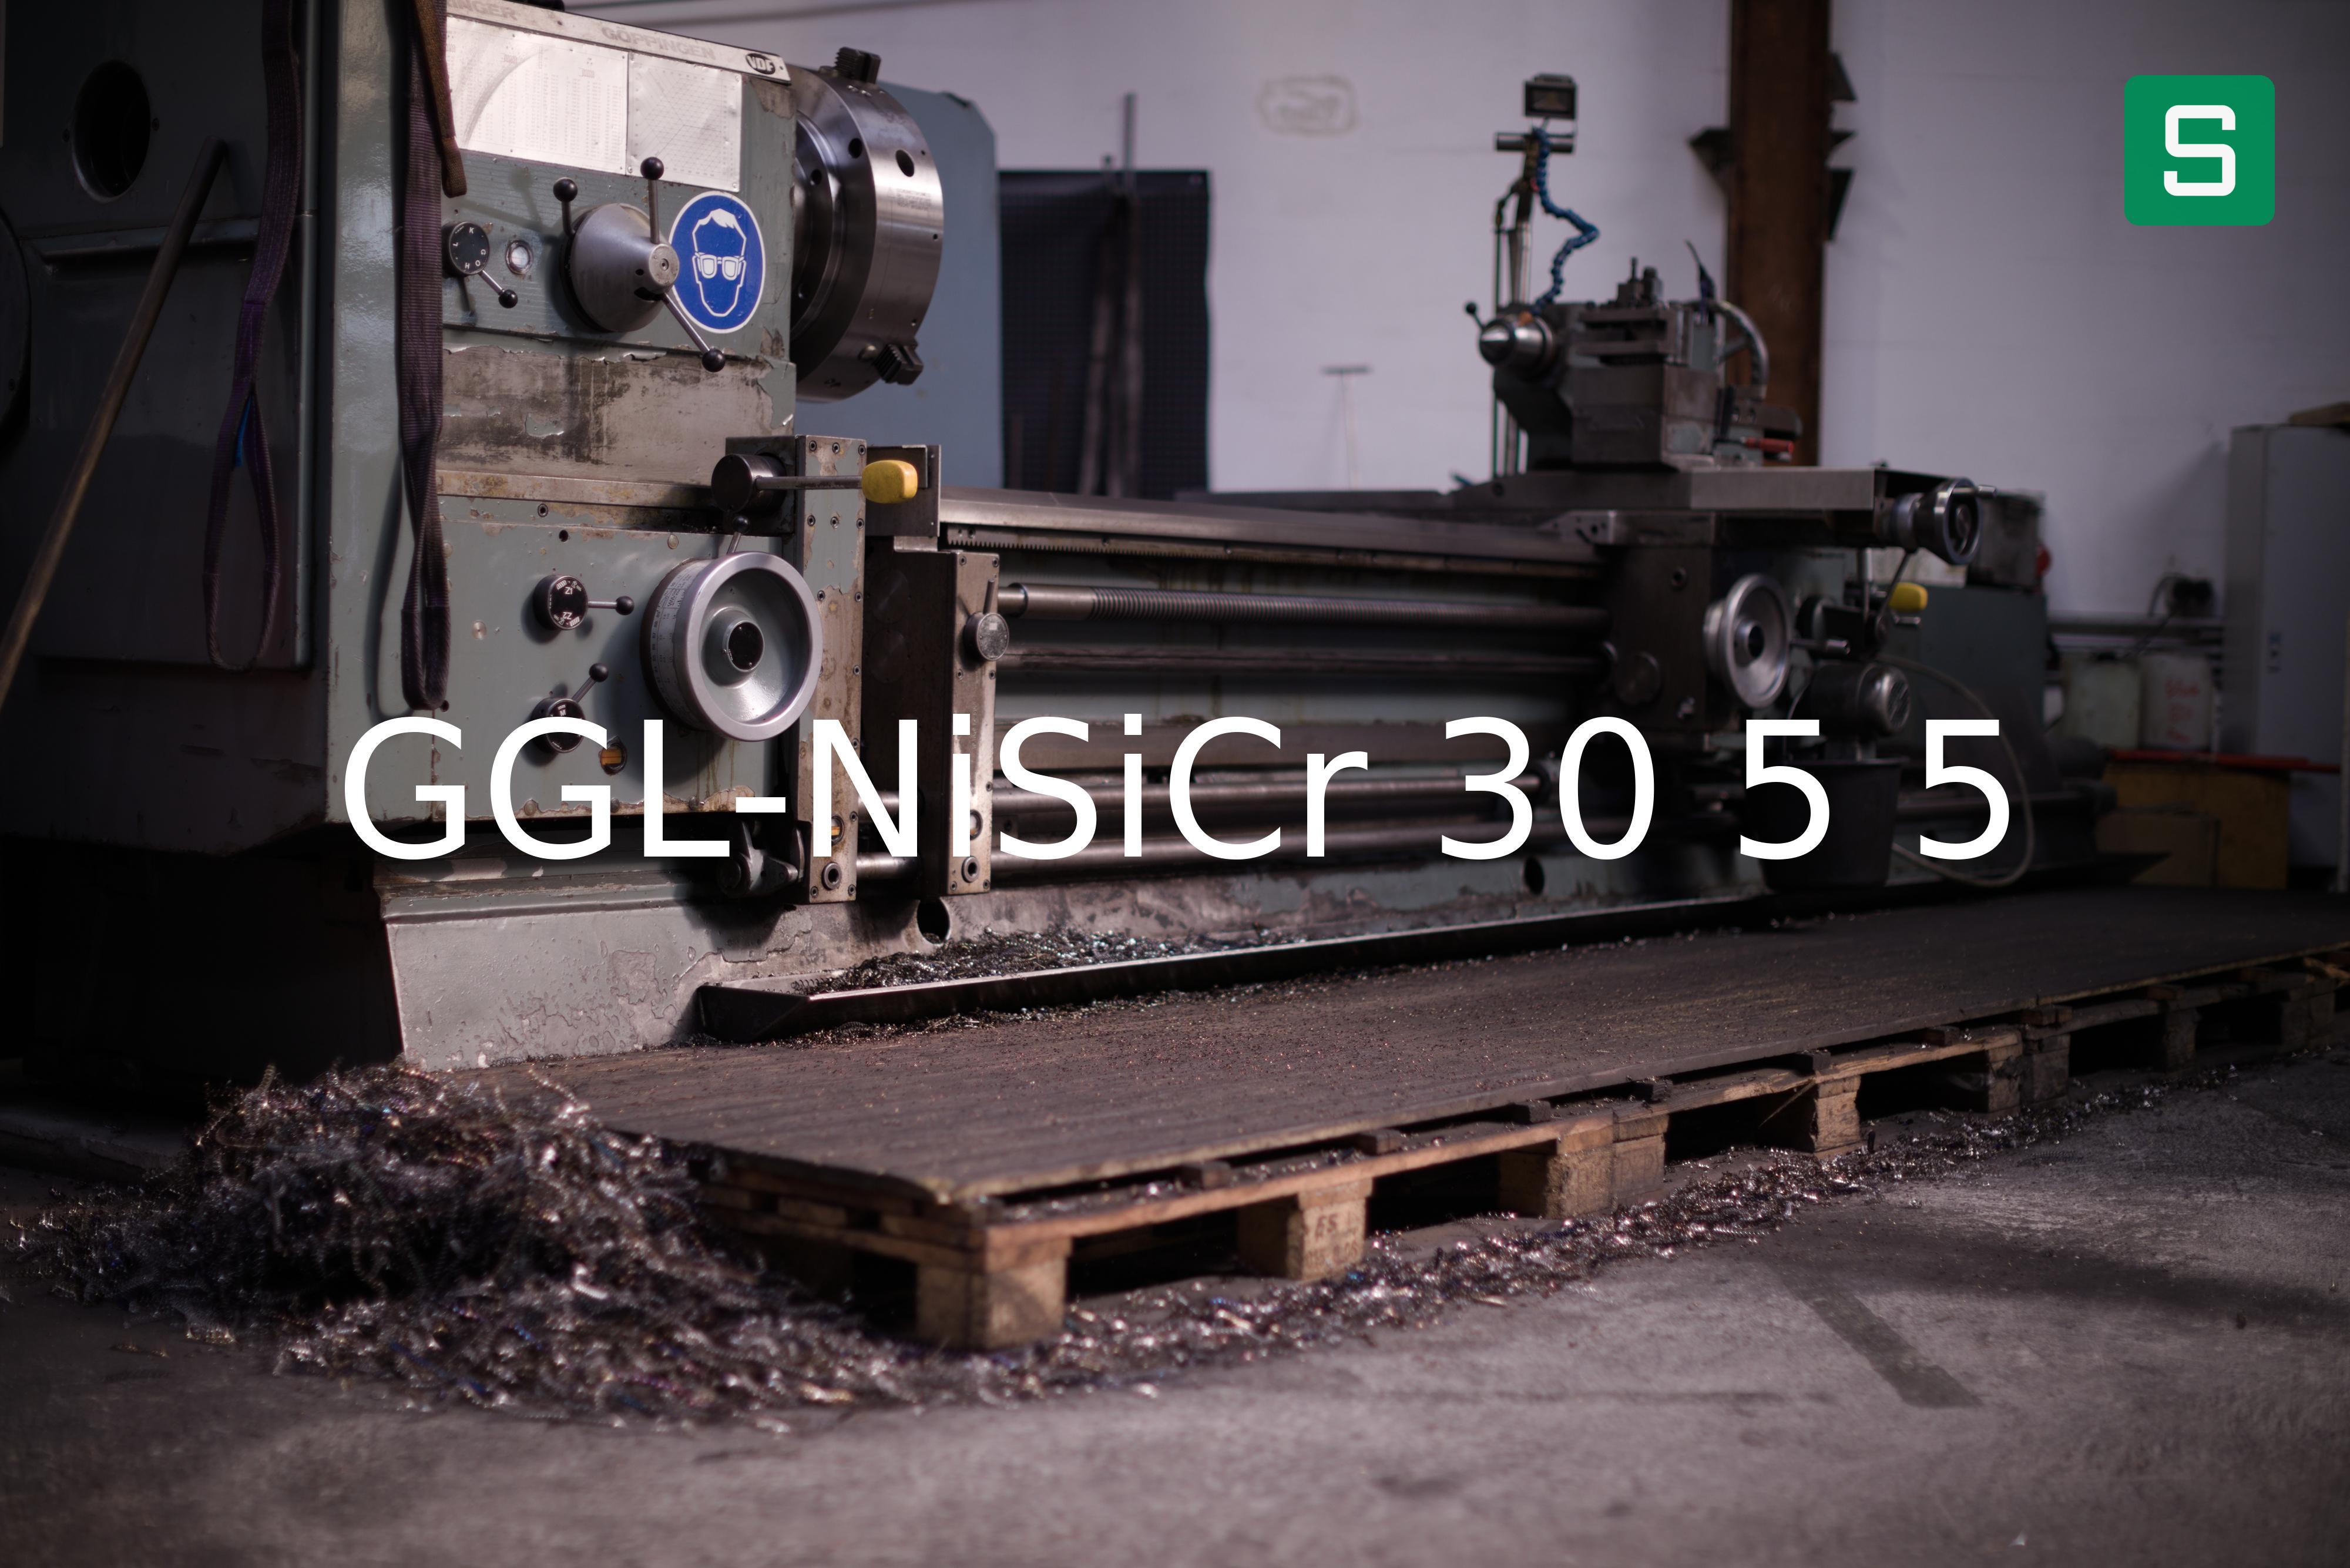 Steel Material: GGL-NiSiCr 30 5 5